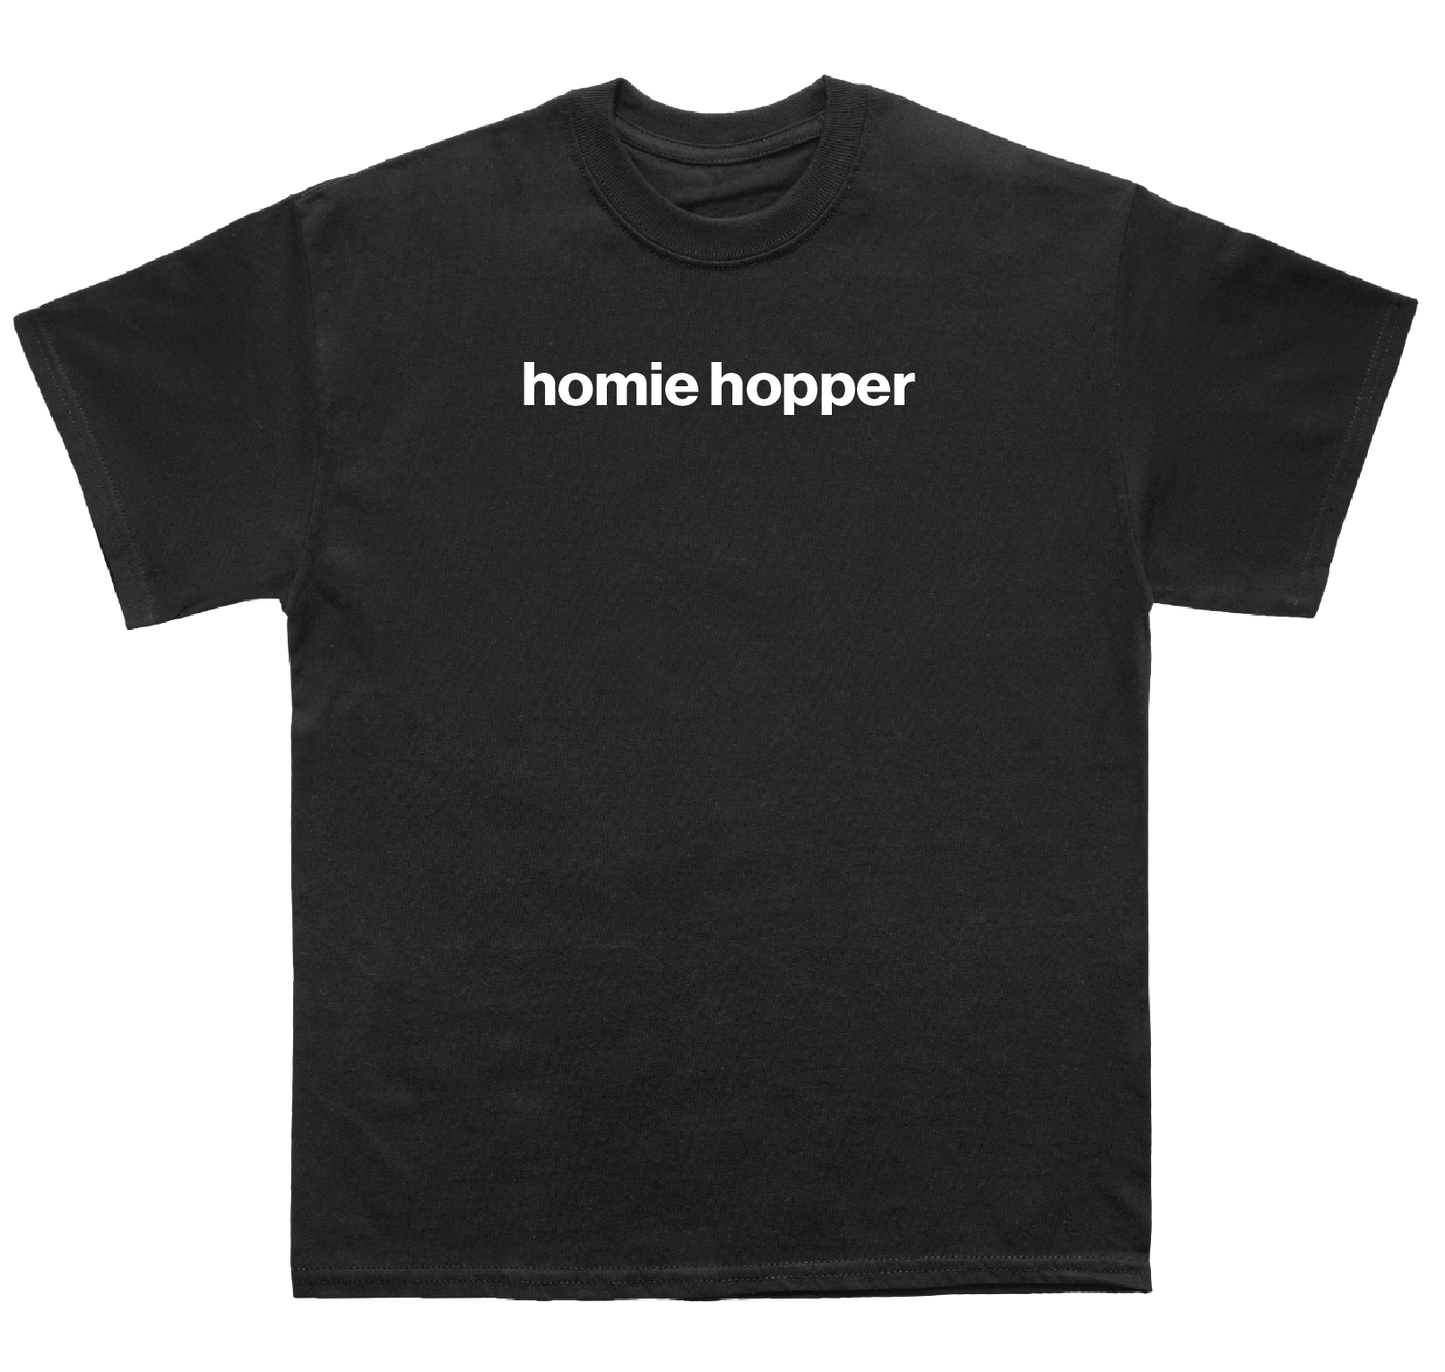 homie hopper shirt – Found my Hoodie